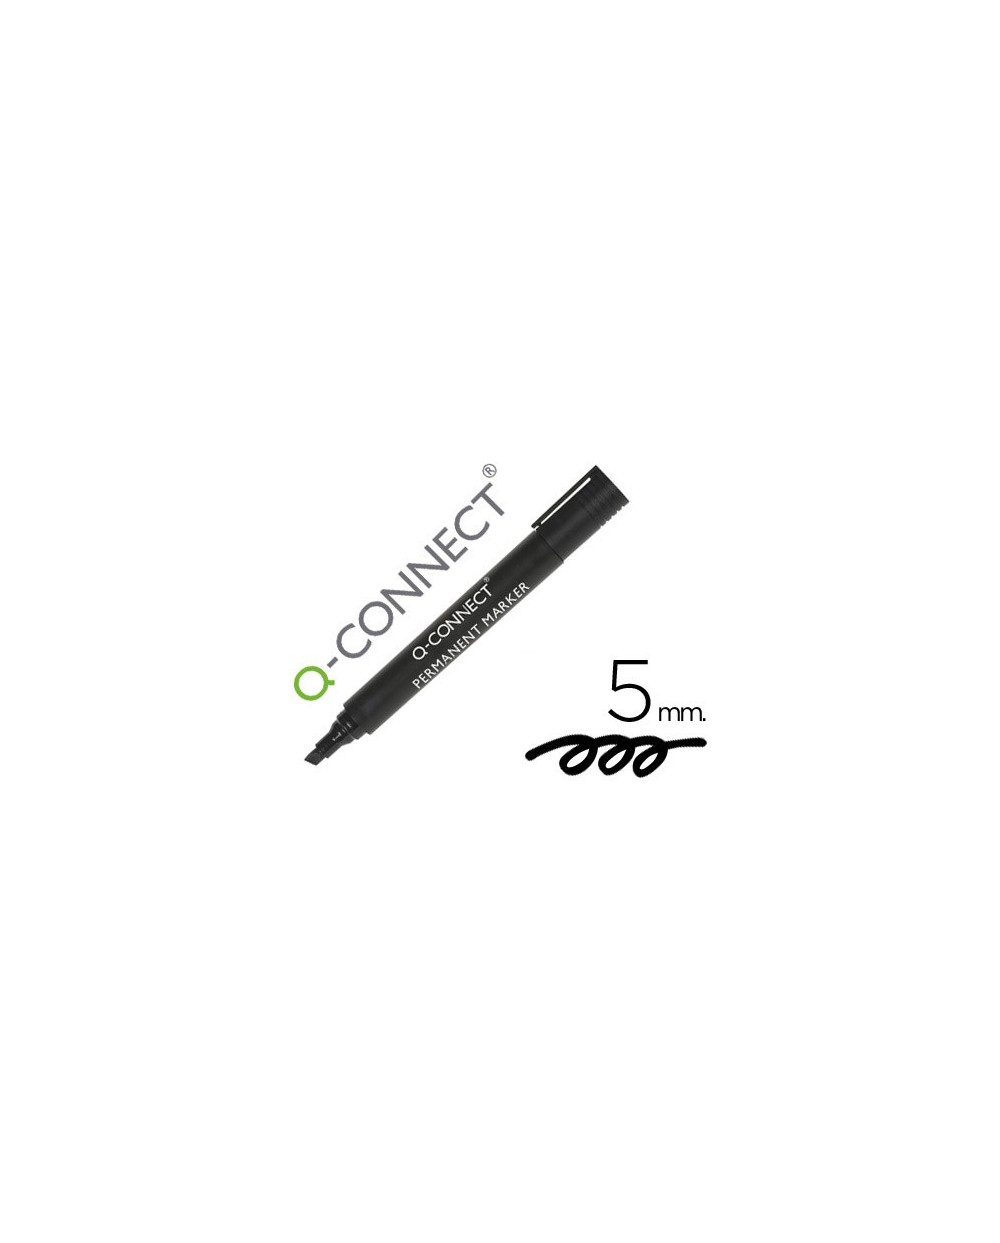 Rotulador q connect marcador permanente negro punta biselada 50 mm